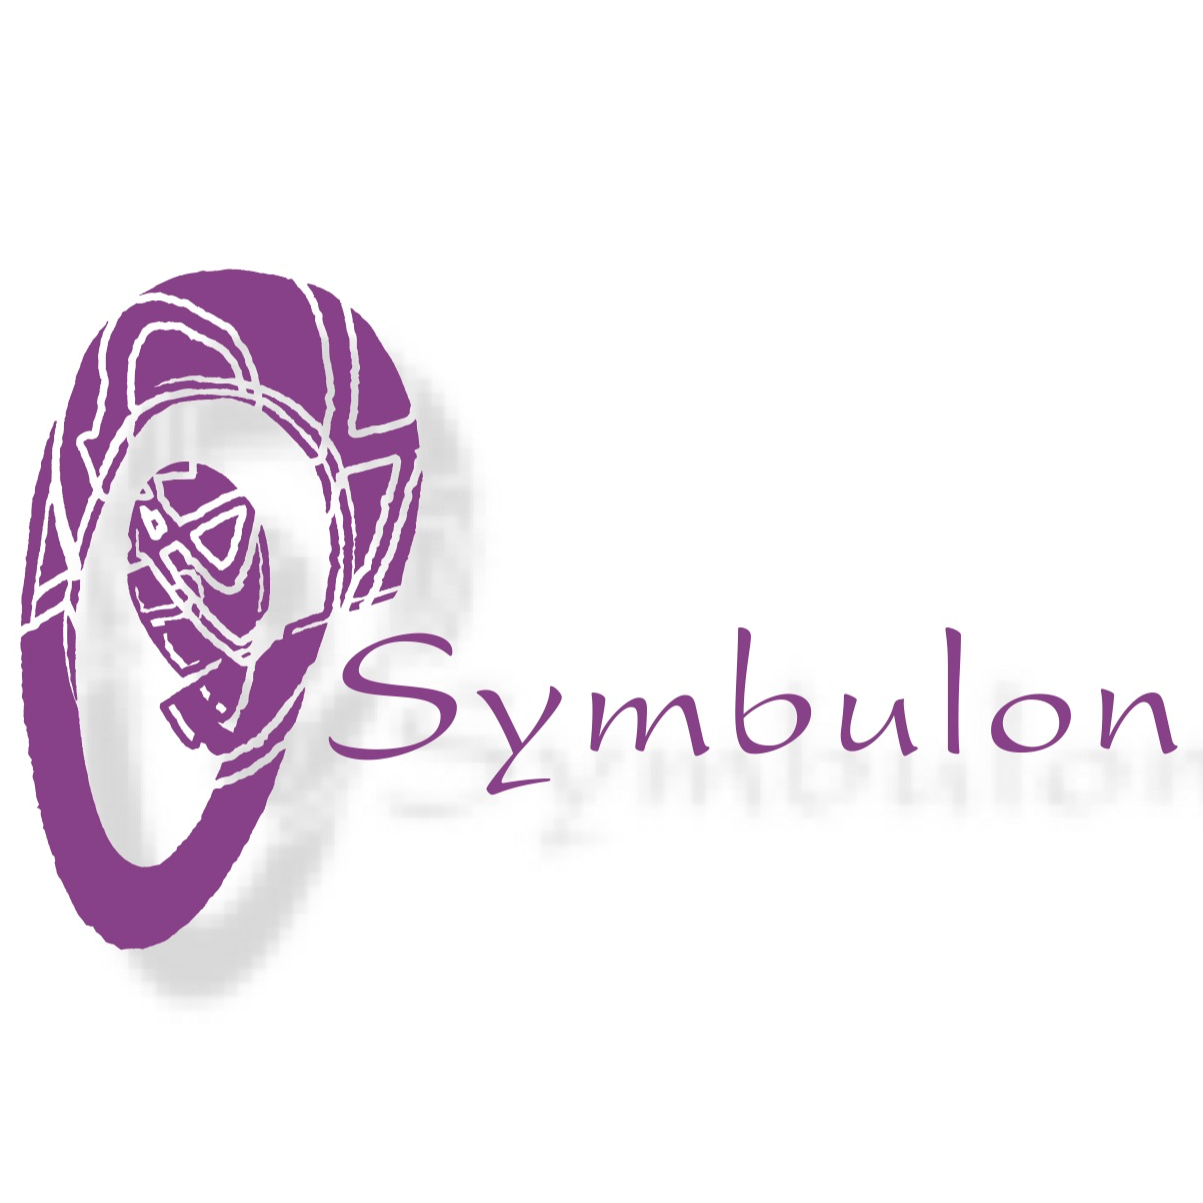 Stichting Symbulon